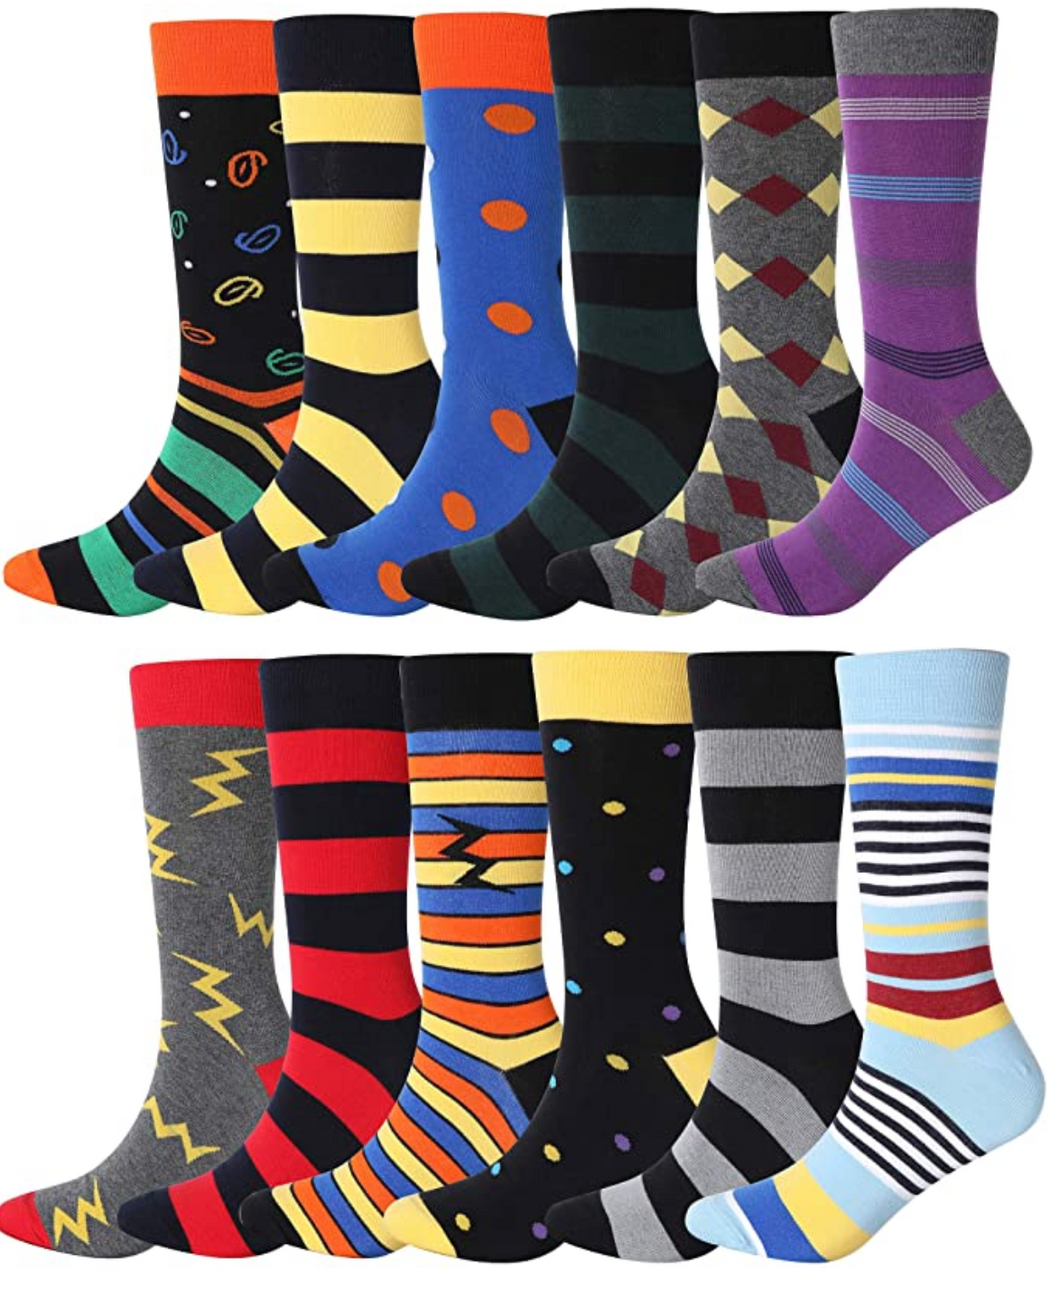 YEJIMONG Men's Colorful Novelty Dress Socks - Funky Pattern (12 Pairs / Size 9-12 / Cotton)